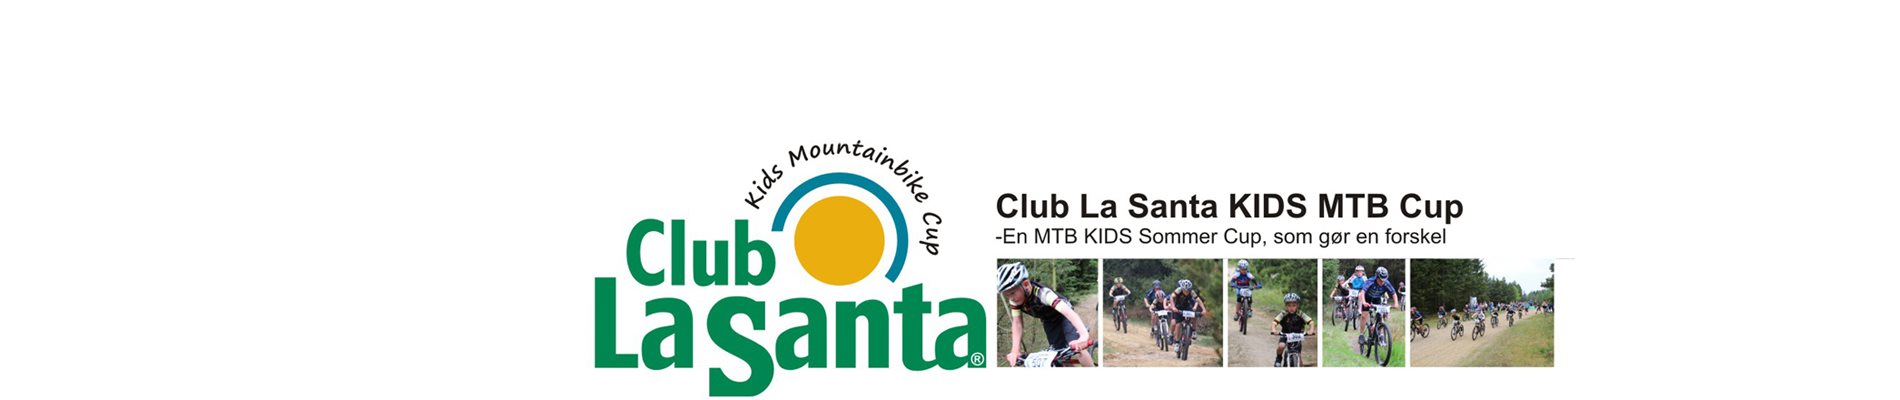 CLUB LA SANTA KIDS MTB CUP '20 - Samlet CUP